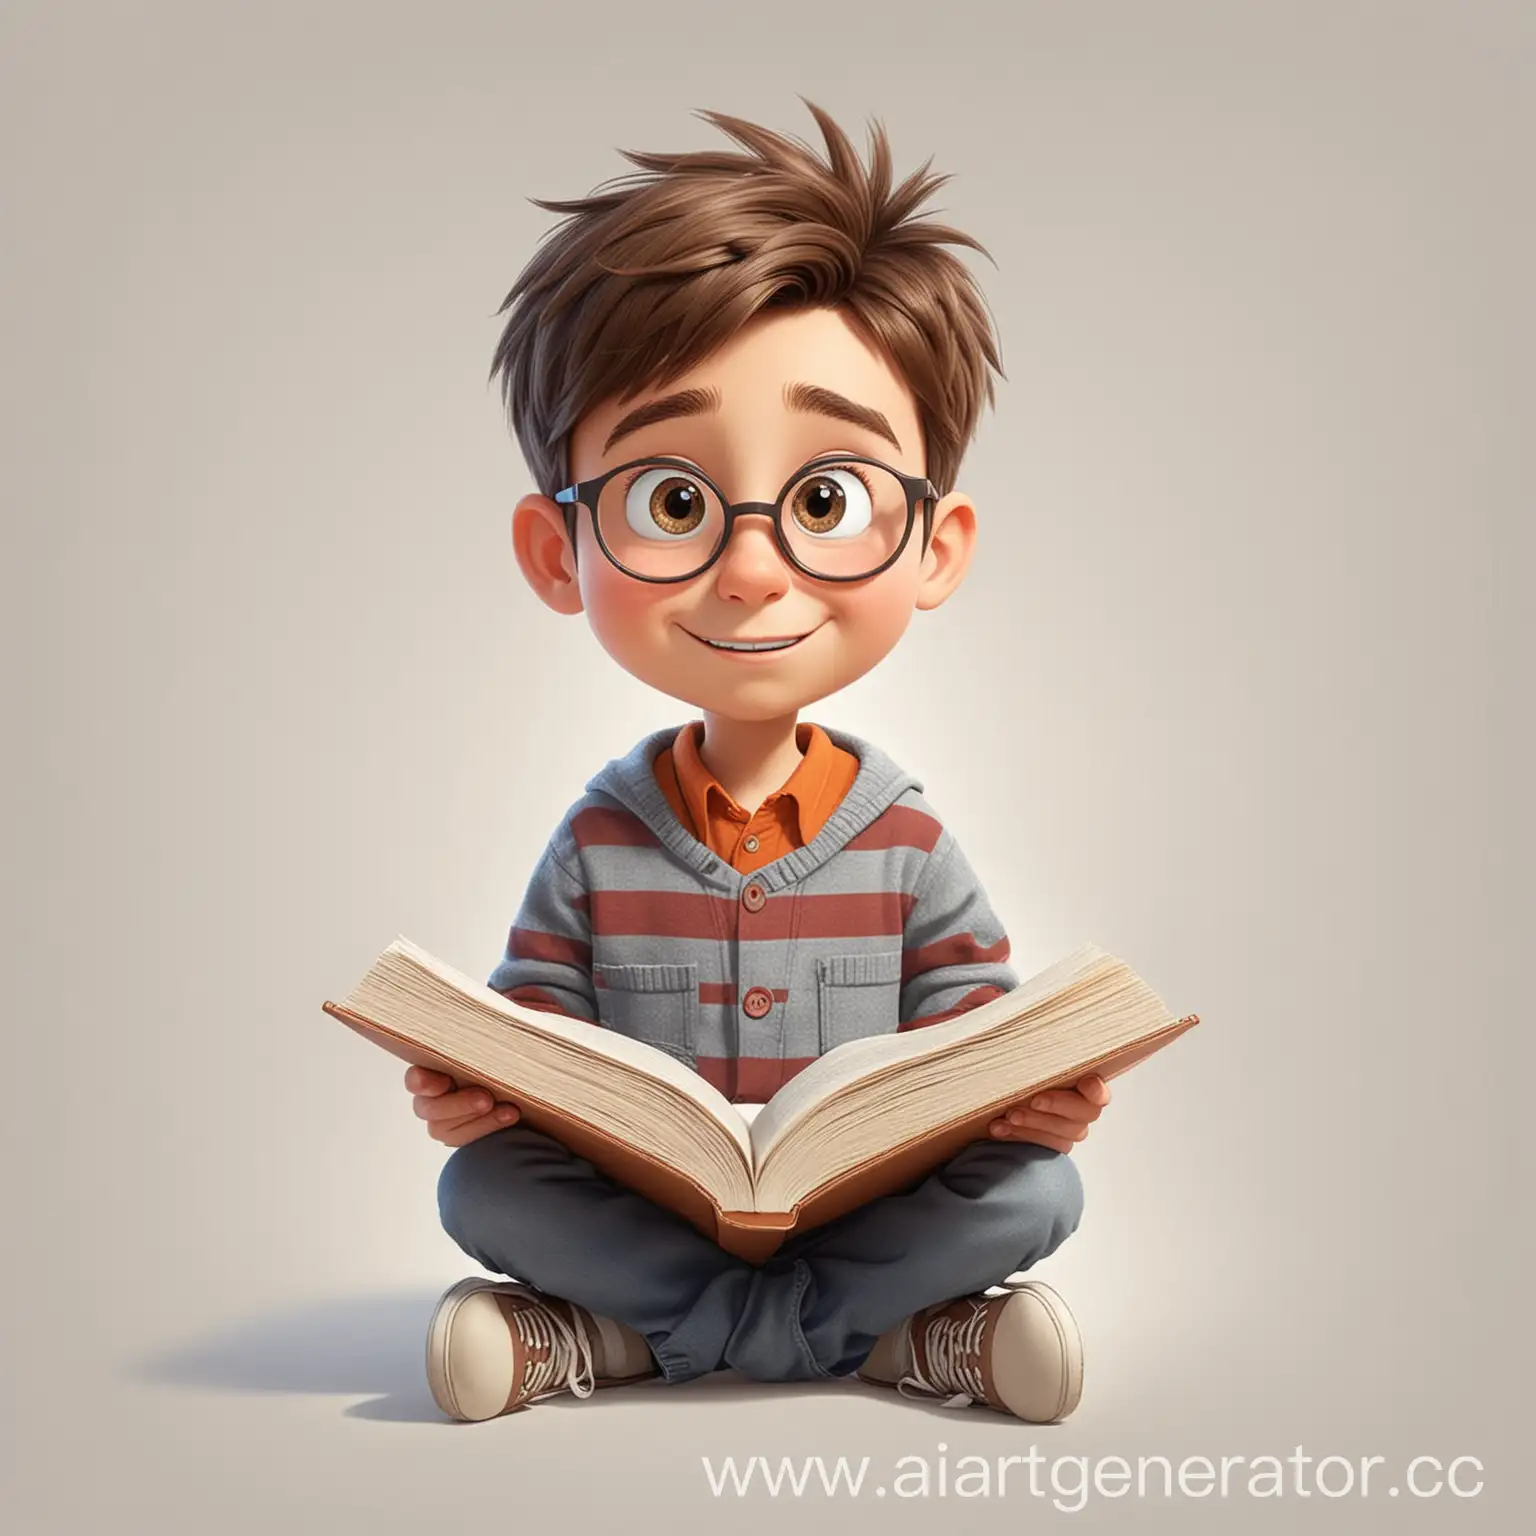 Cartoon-Boy-Reading-Book-on-White-Background